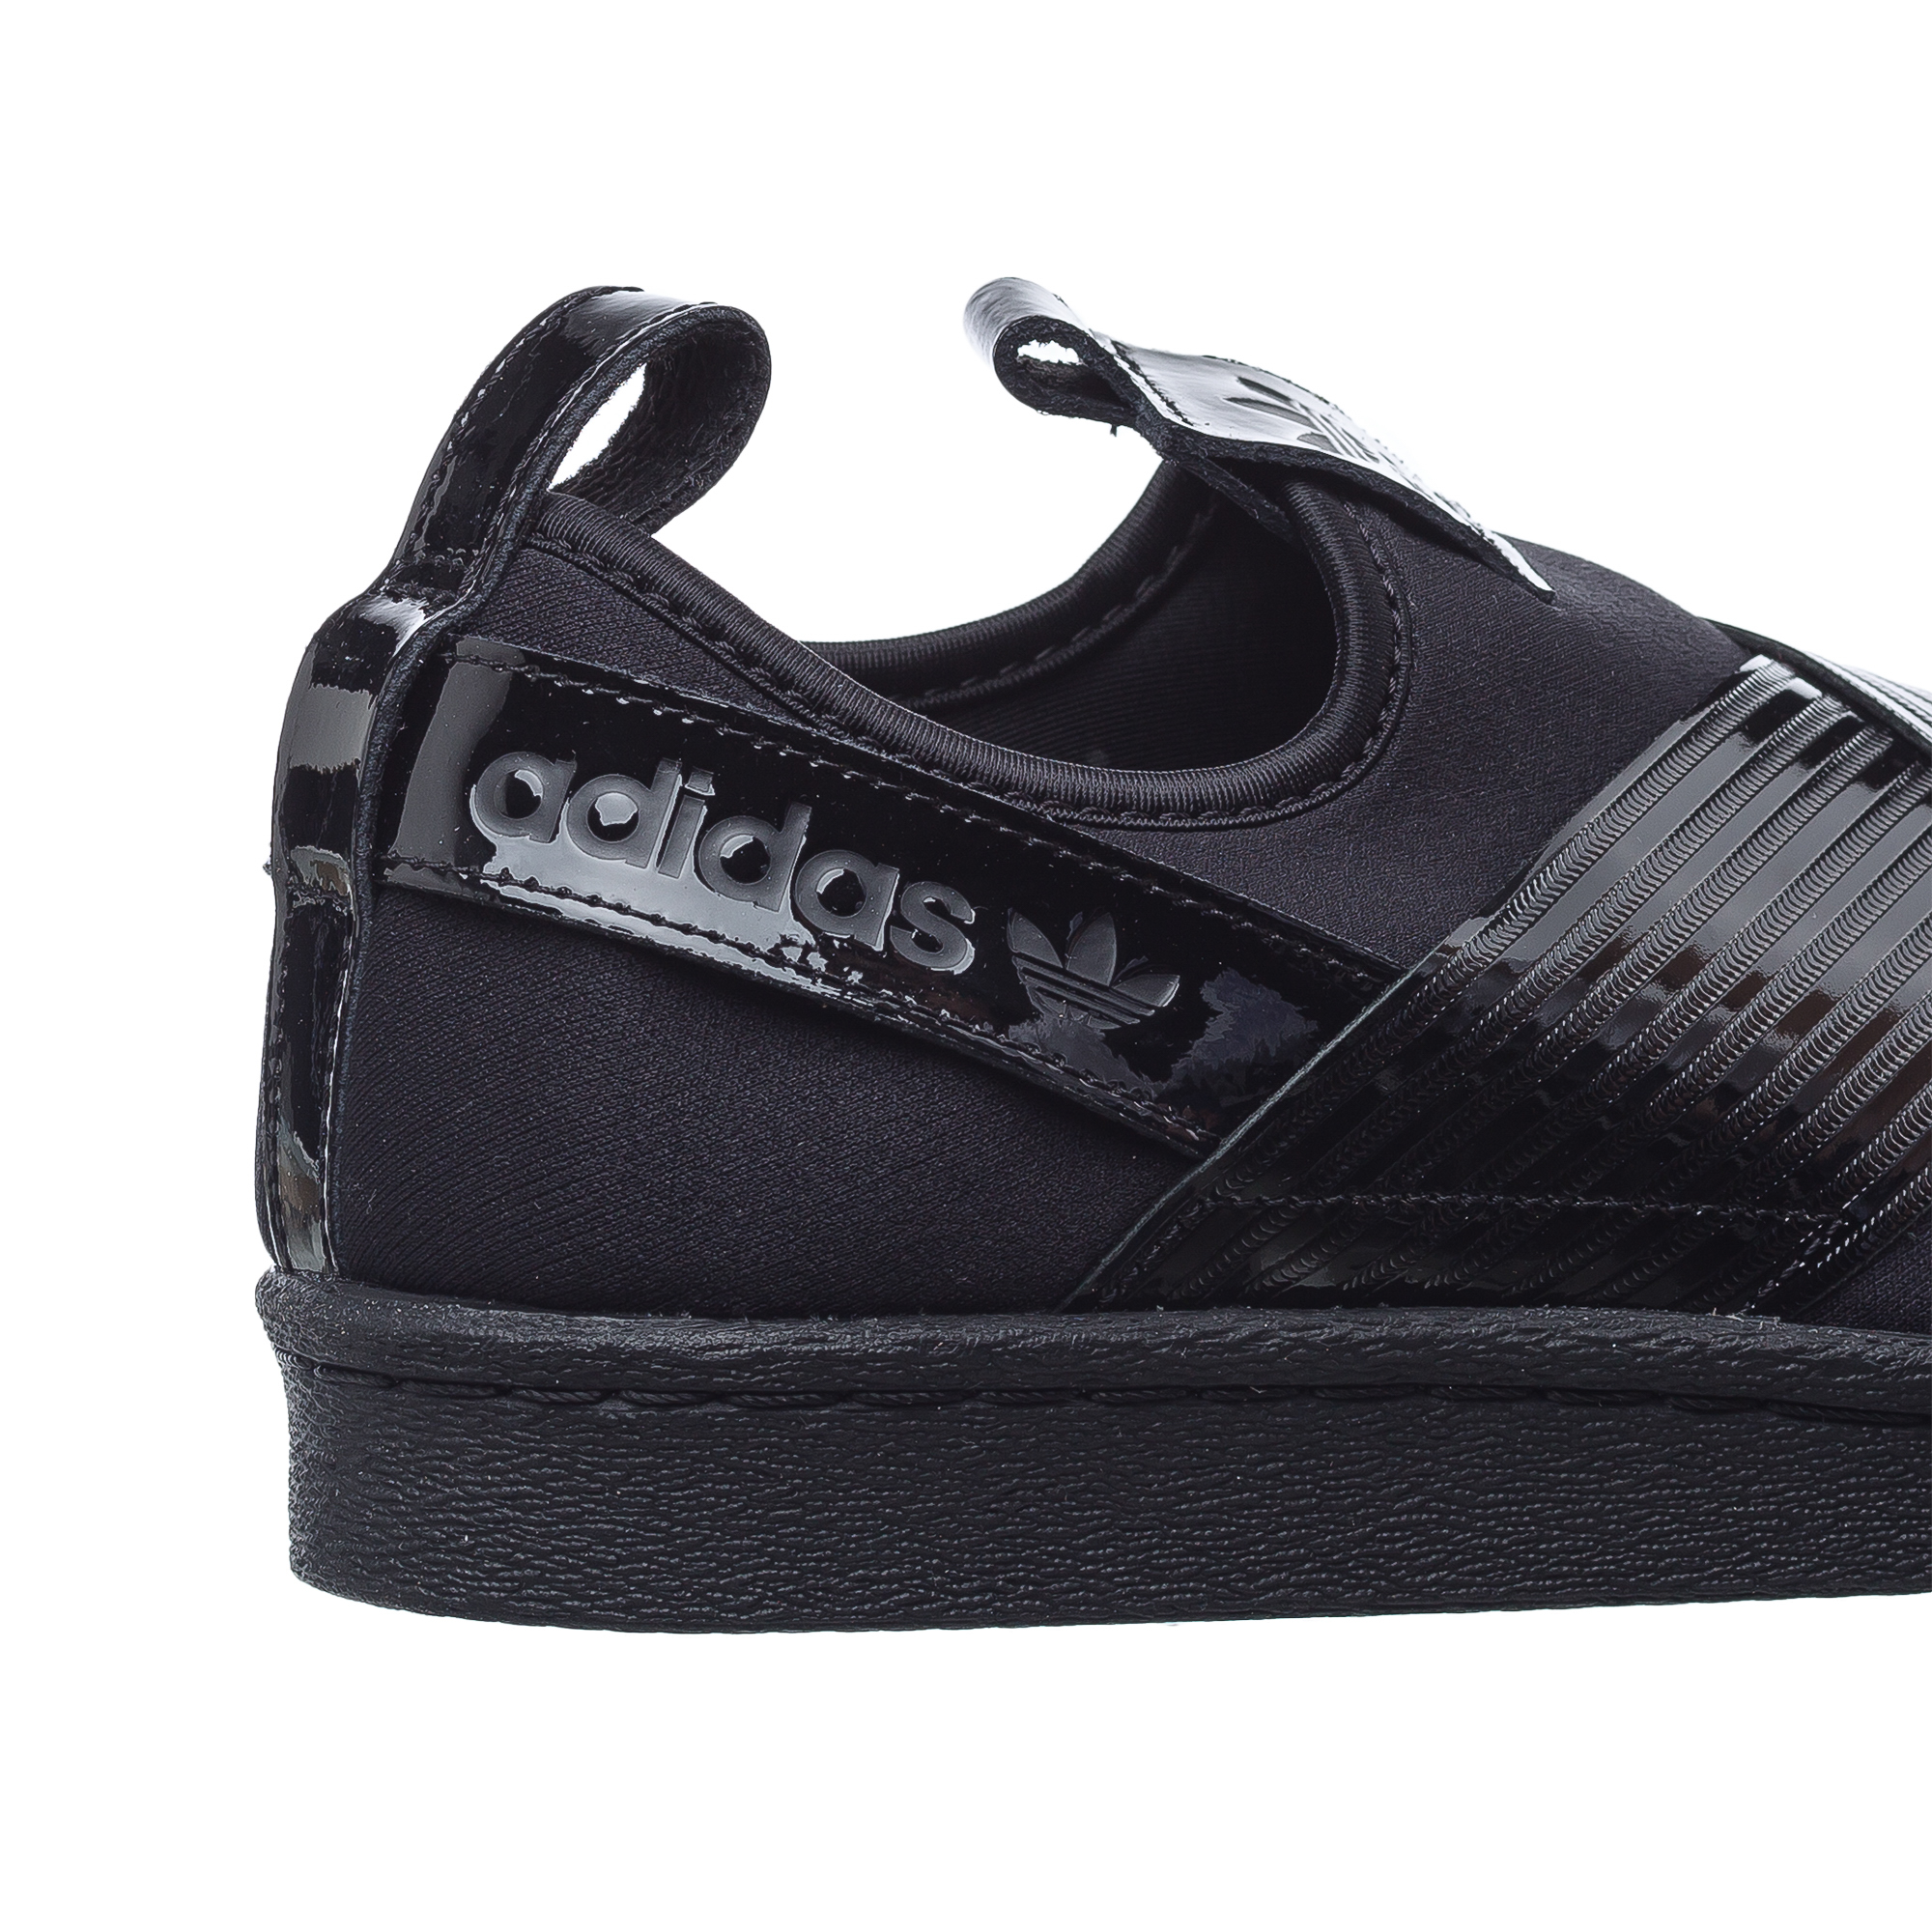 Superstar Slip On Adidas, размер 37, цвет черный ADBD8055 - фото 6